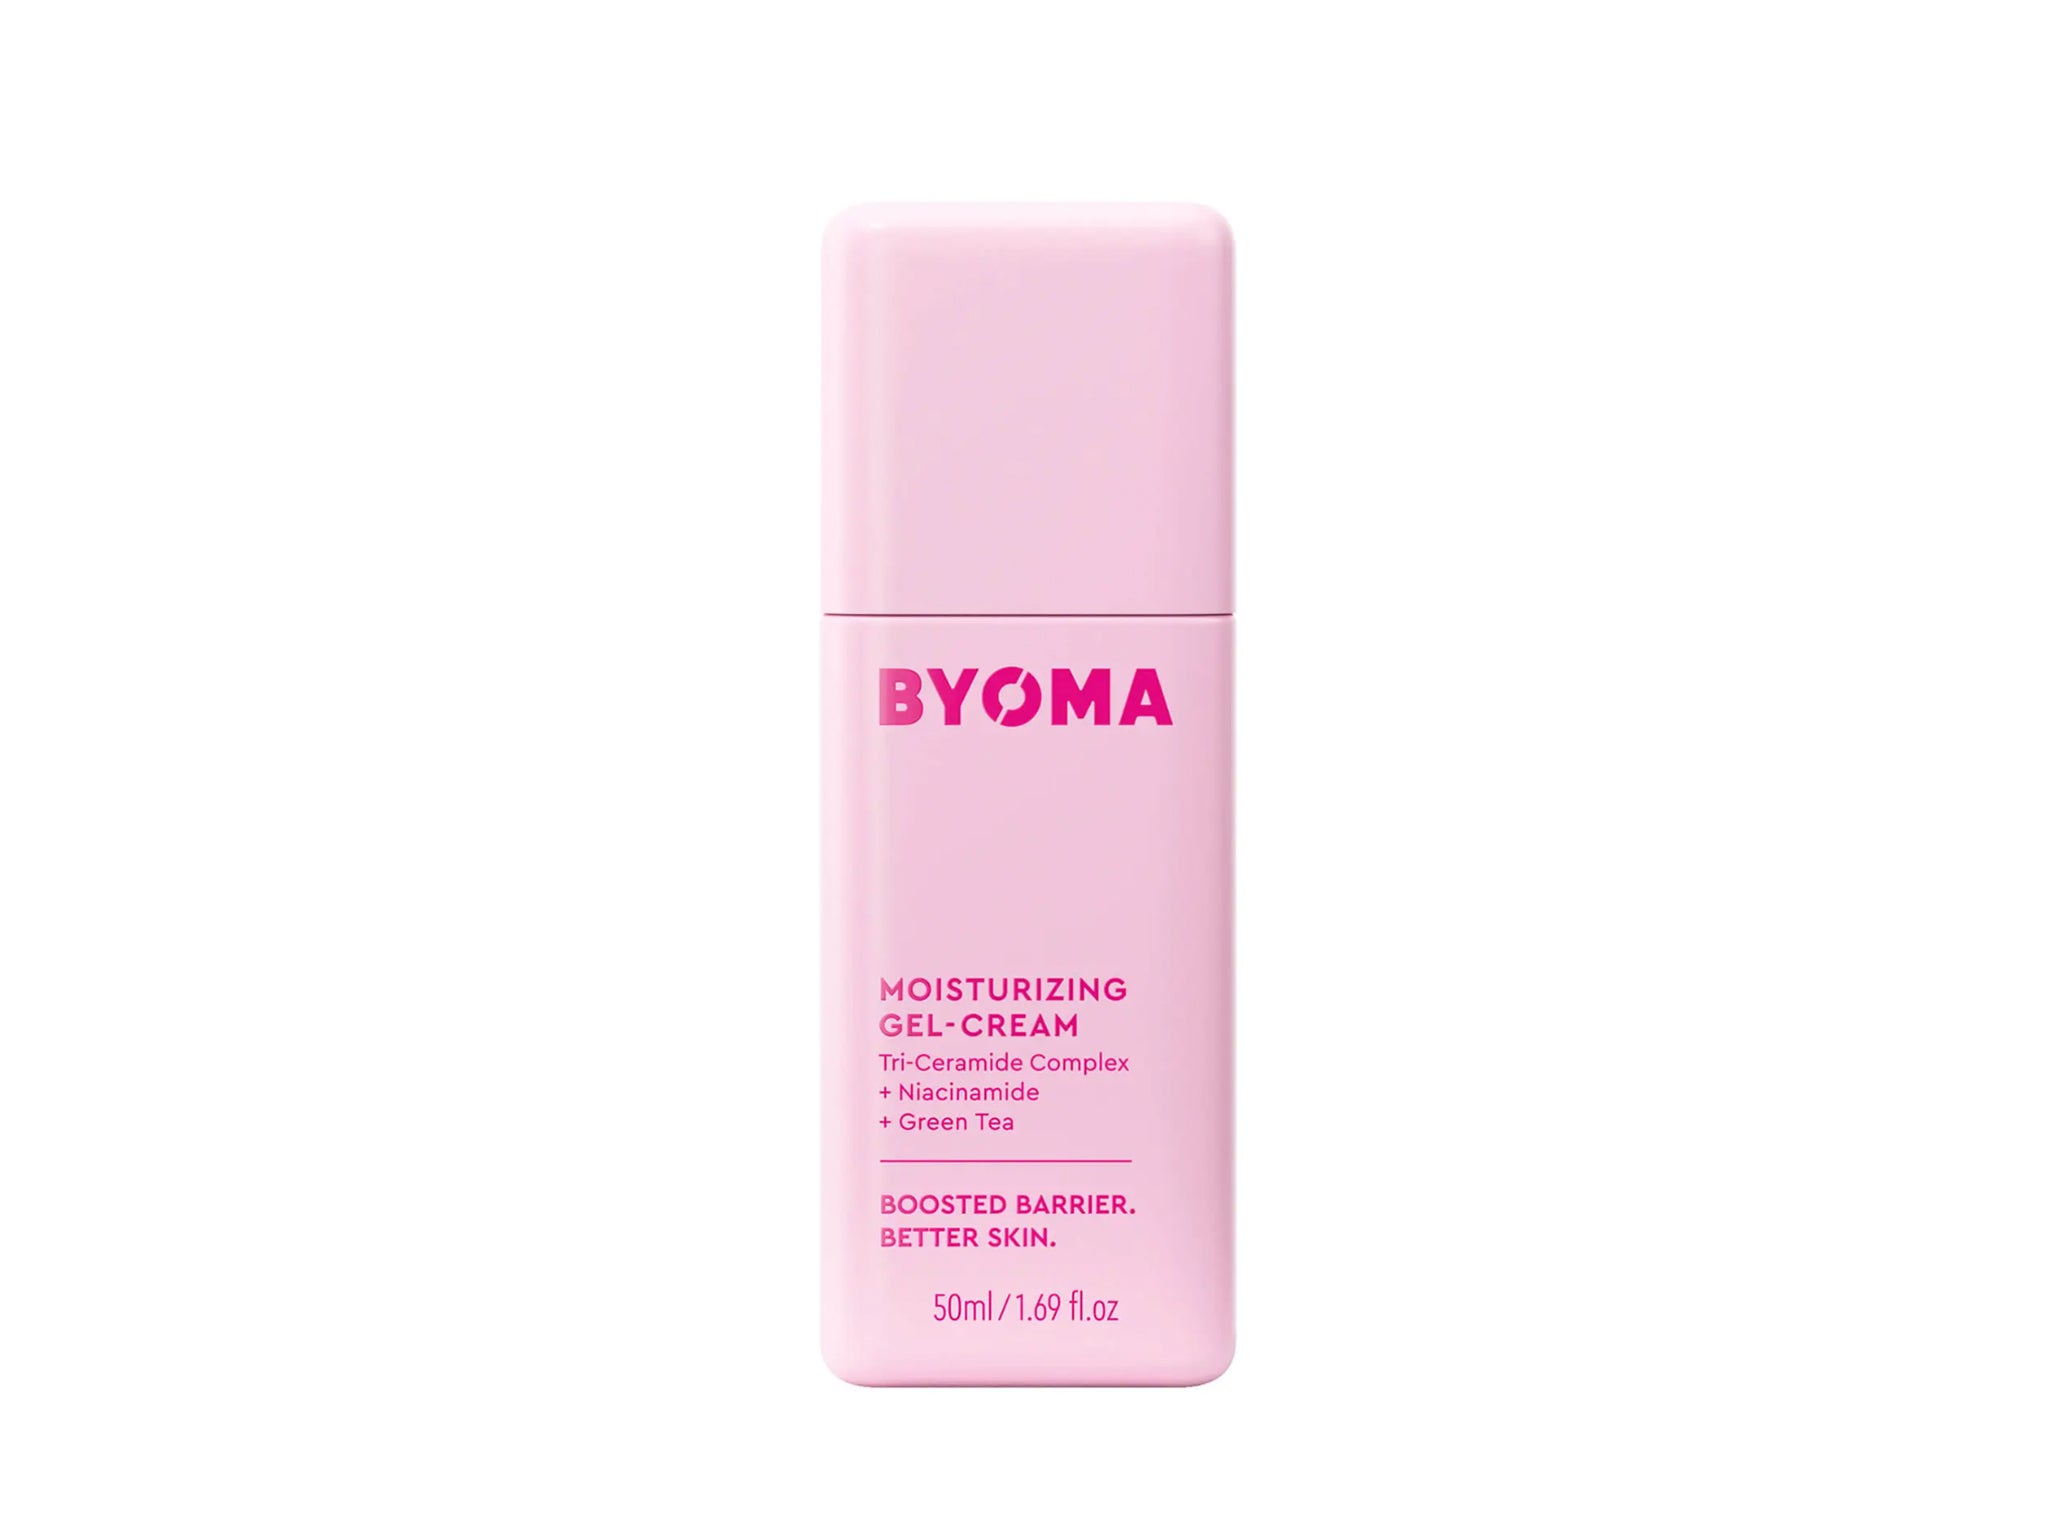 Byoma moisturising gel cream